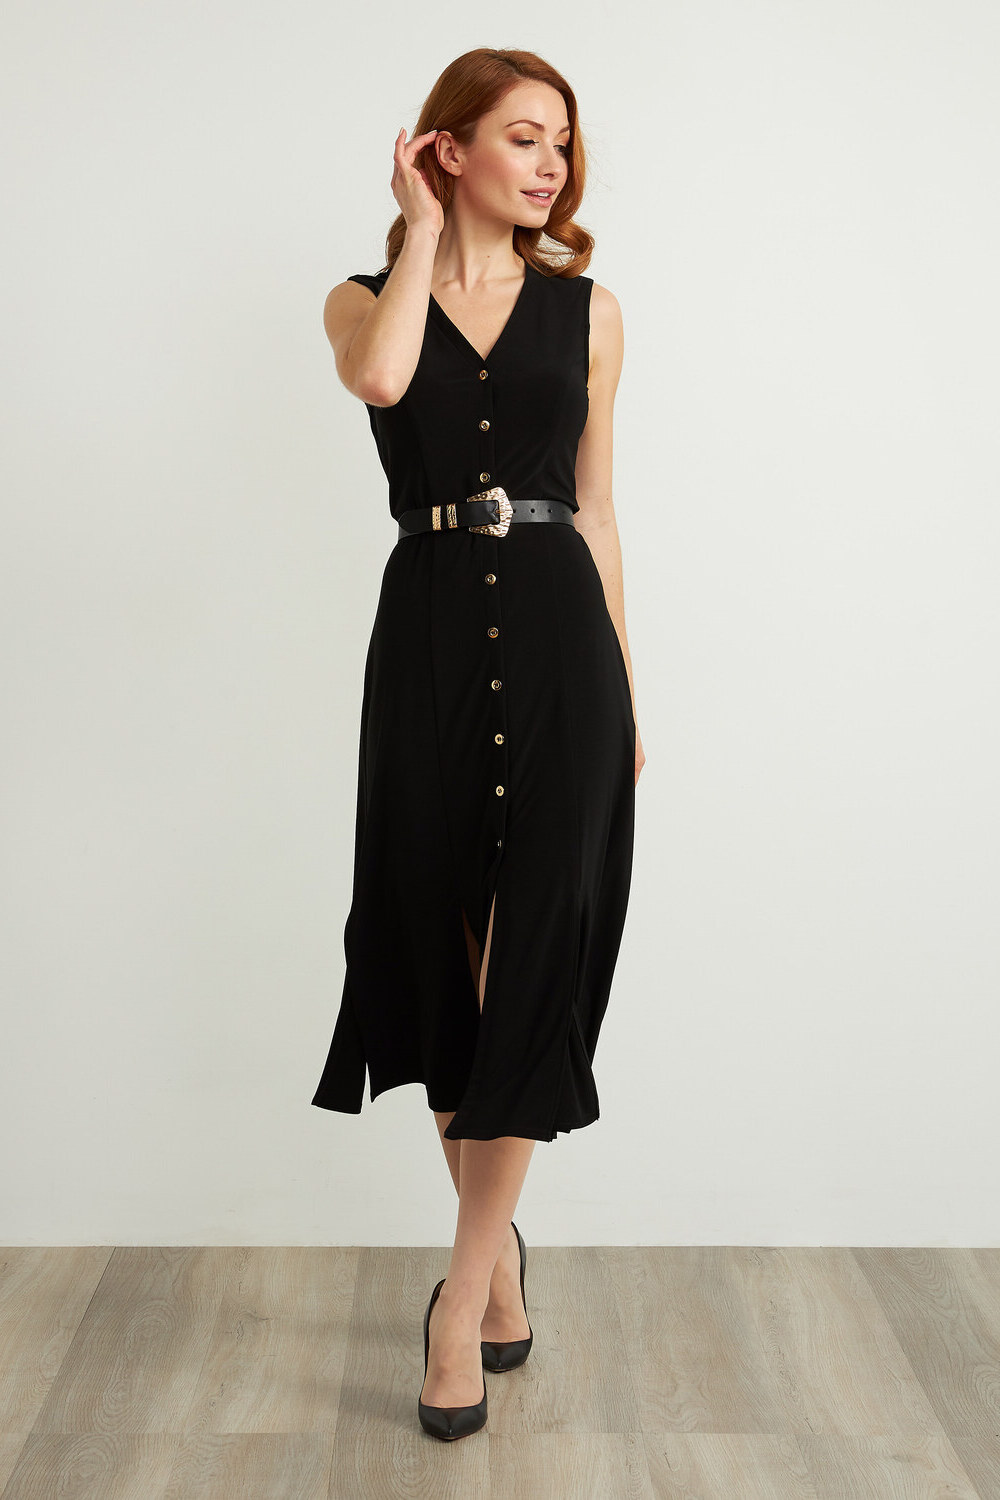 Joseph Ribkoff Sleeveless Belted Dress Style 211179. Black